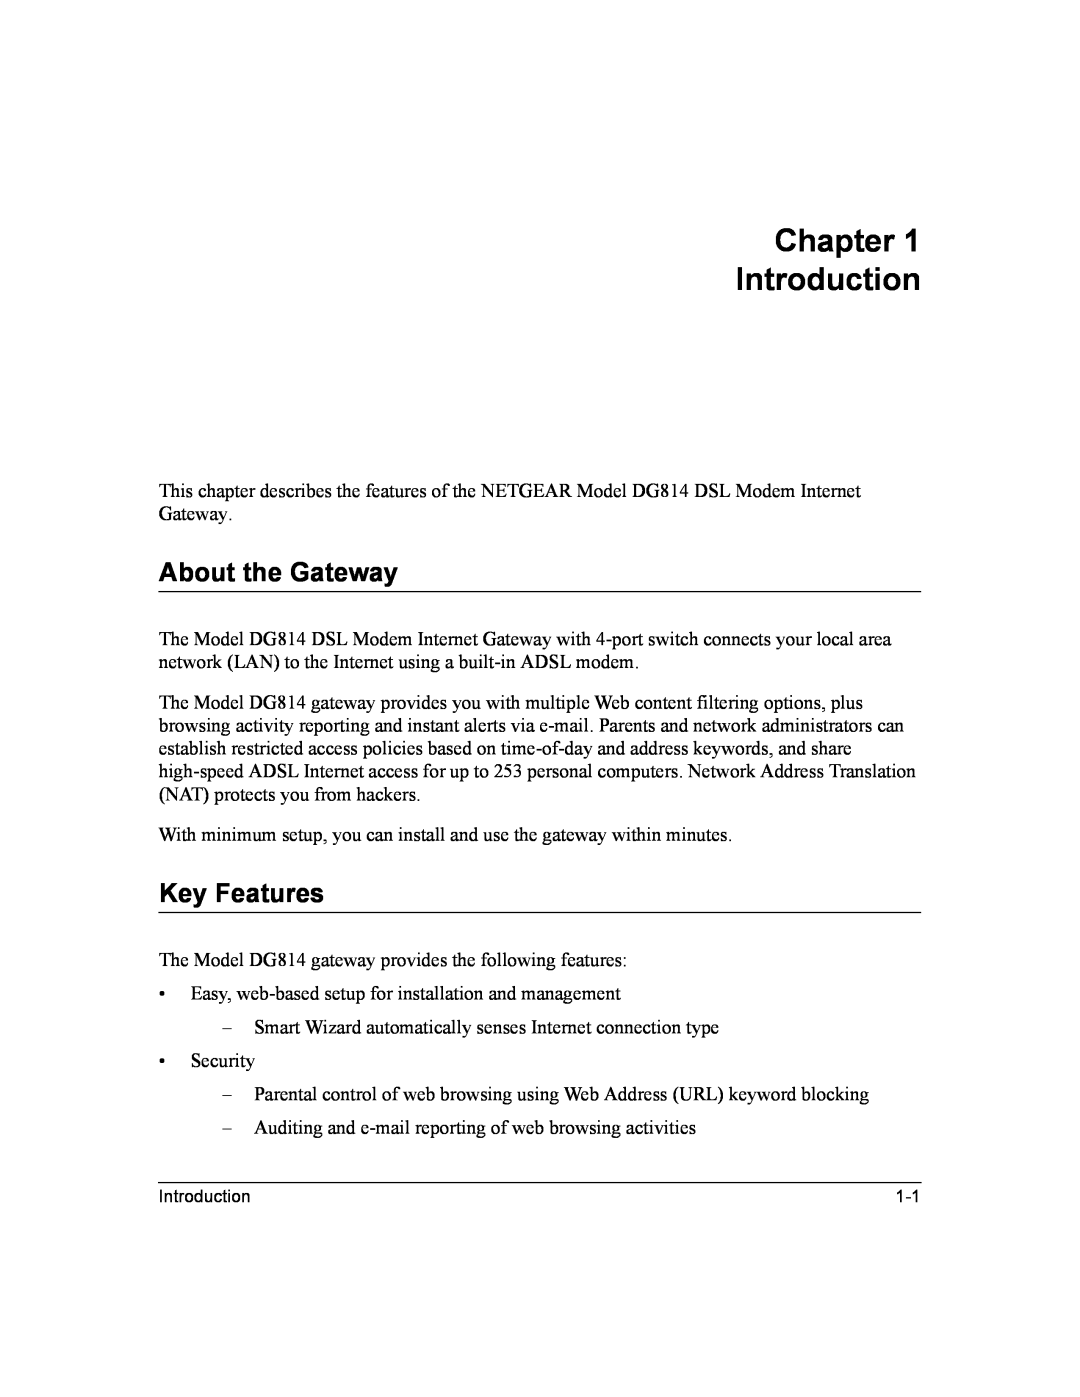 NETGEAR DG814 DSL manual Chapter Introduction, About the Gateway, Key Features 